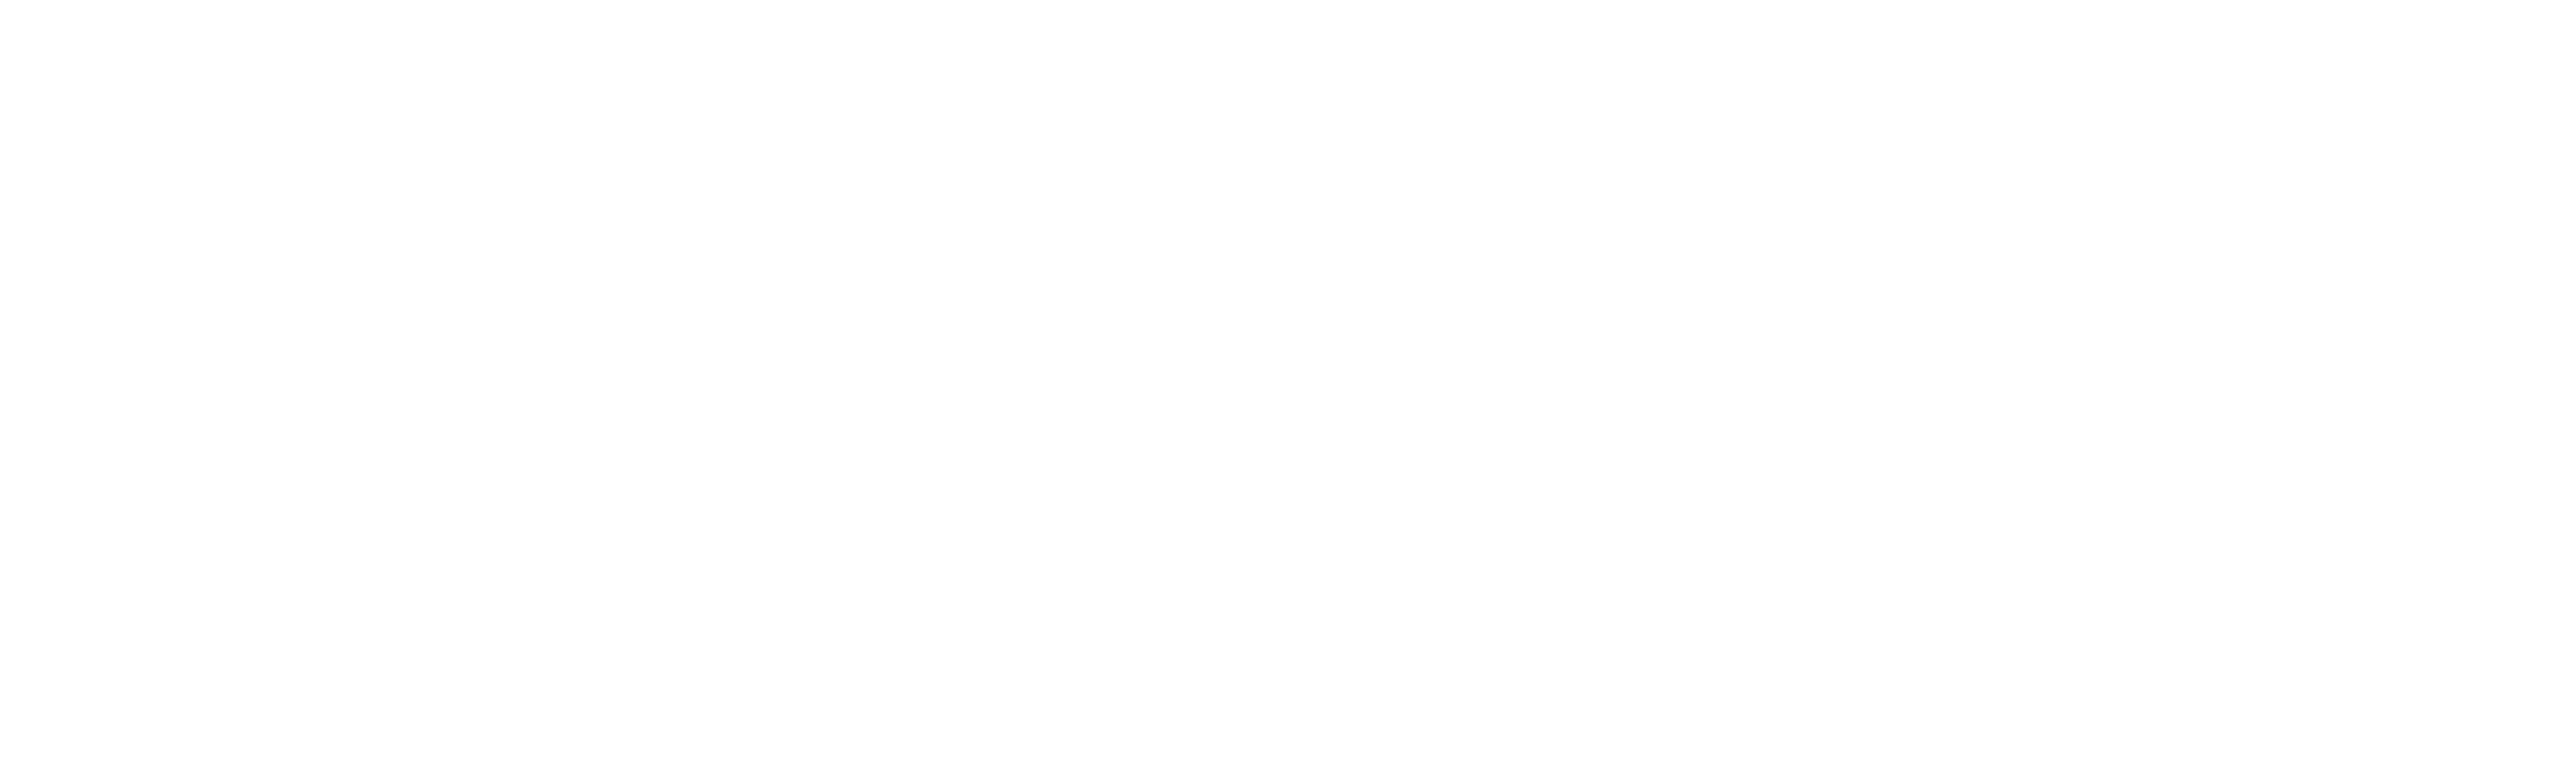 Nutanix-Logo-White-Digital